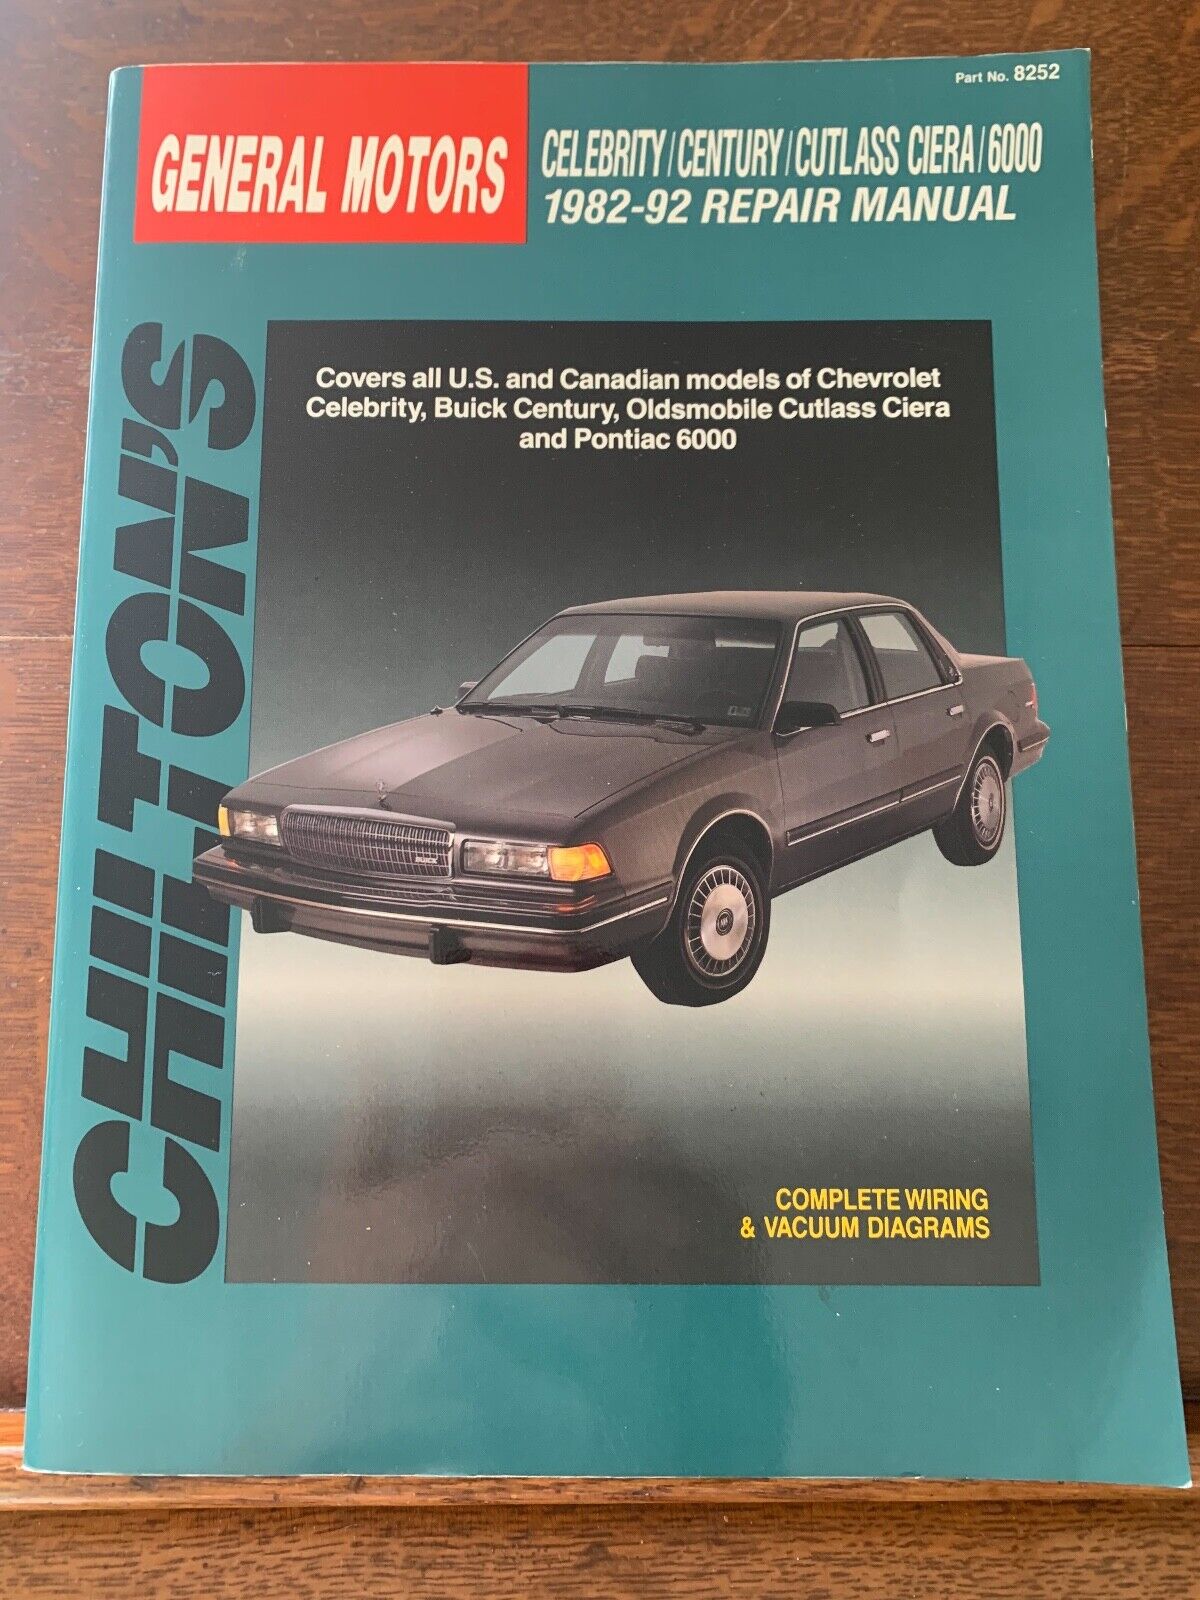 Chilton's General Motors Repair Manual 1982-92, Celebrity Century Cutlass Ciera 